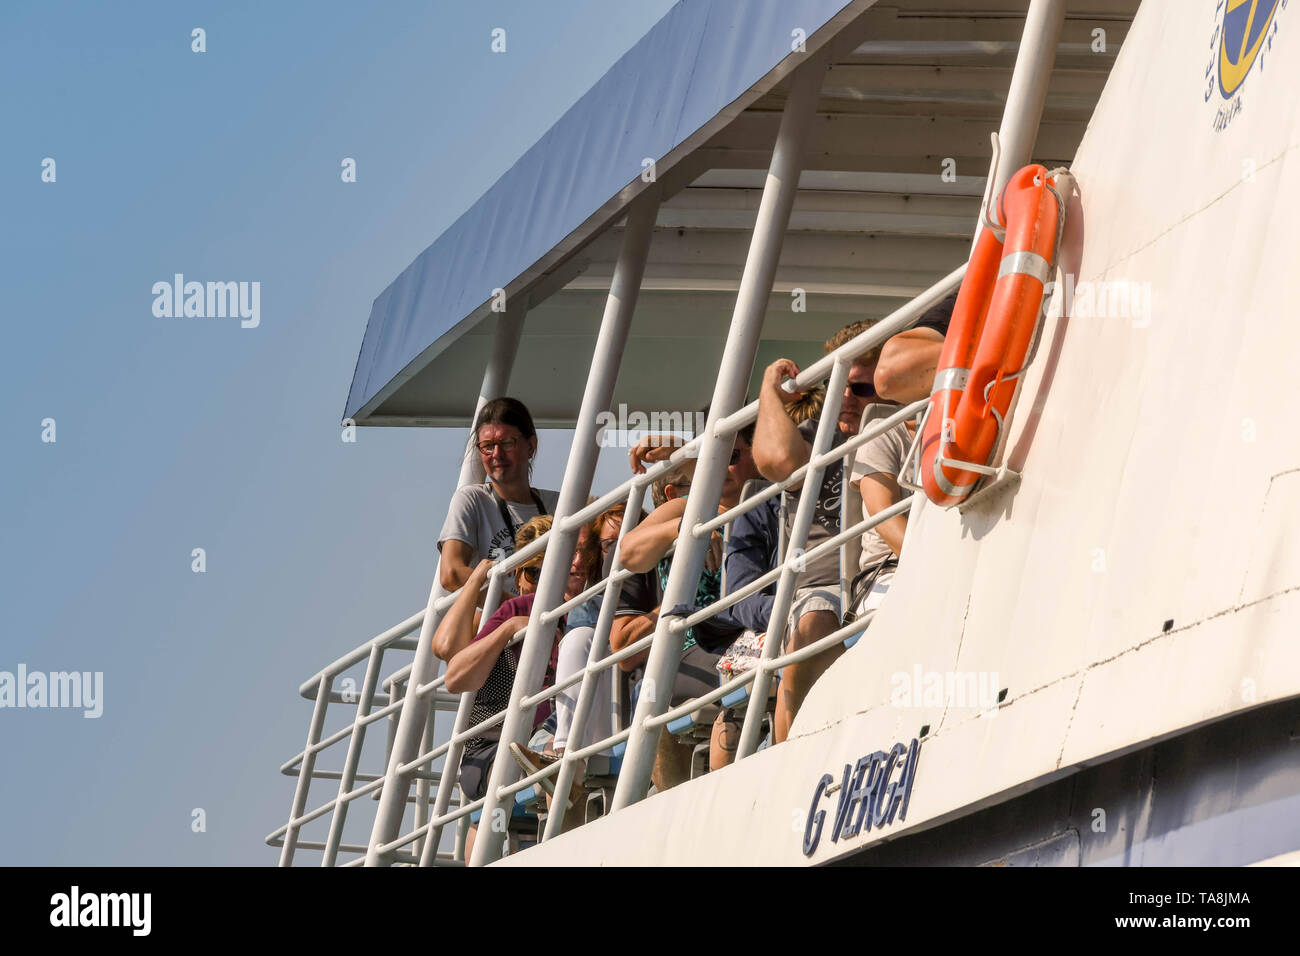 GARDA, LAKE GARDA, ITALY - SEPTEMBER 2018: People on the top deck of a passenger ferry at the town of Garda on Lake Garda. Stock Photo